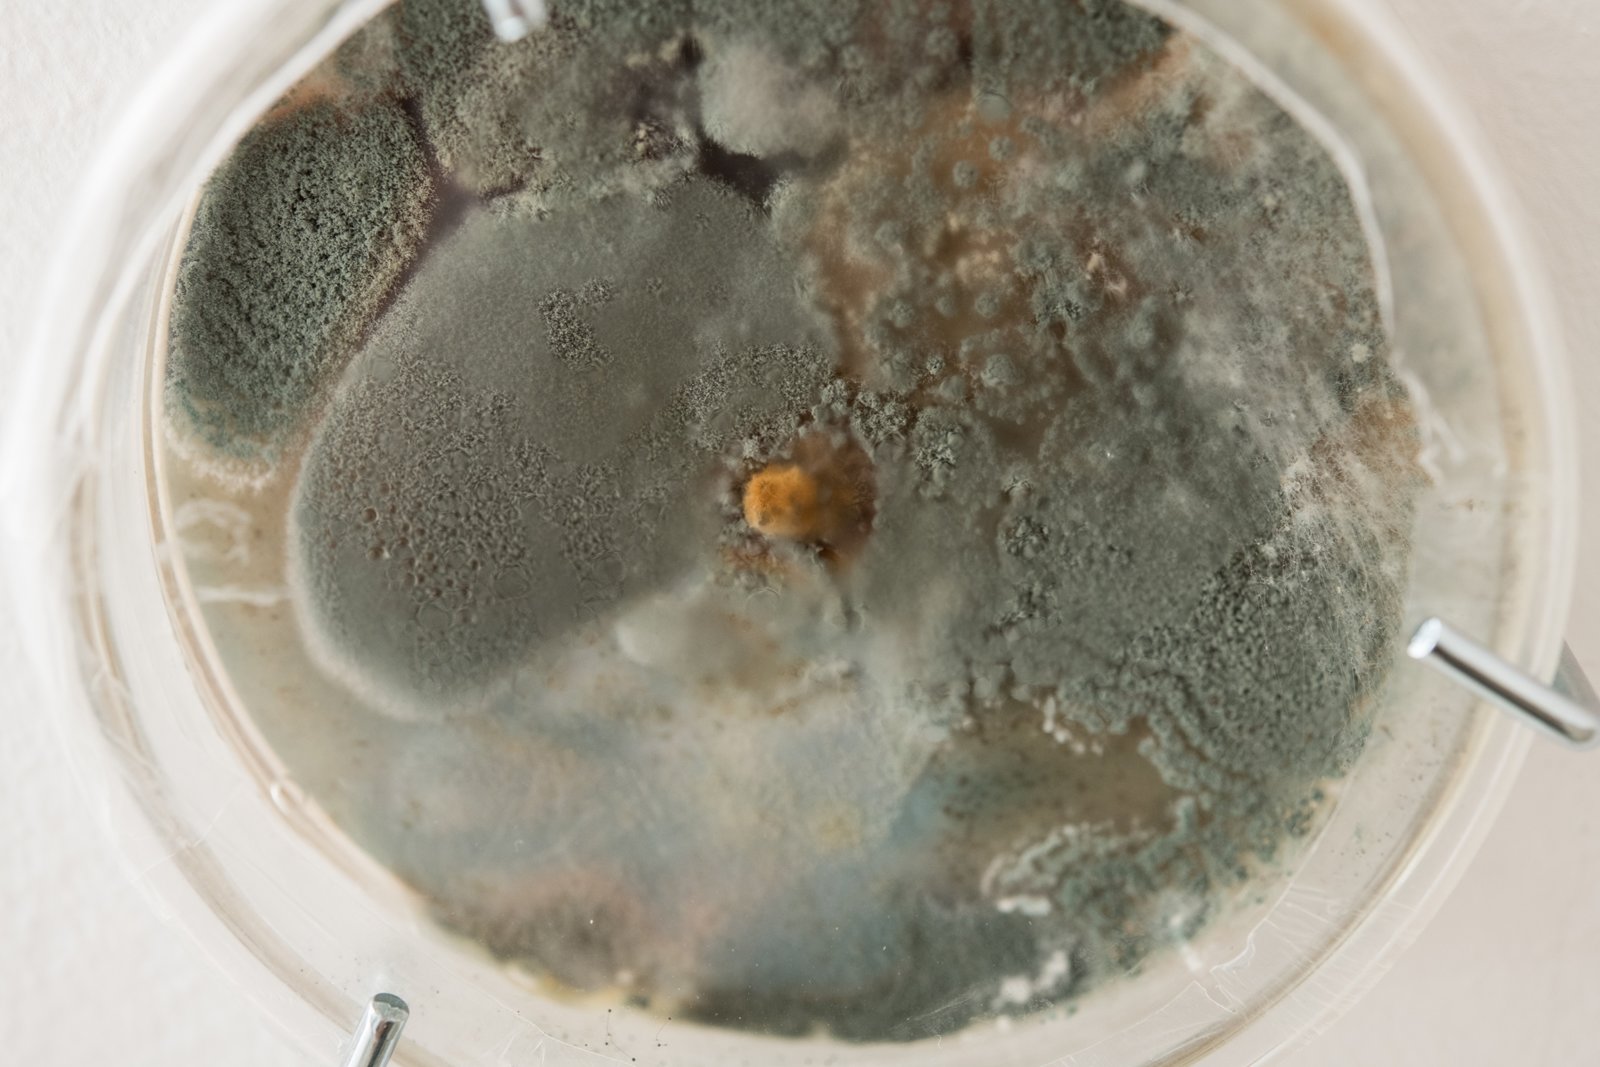 Kasper Feyrer, Cultures (detail), 2019, c-print, pyrex petri dish, agar, malt, yeast, Phellinus igniarius mycelium (willow bracket), contaminants, 9 components, each 4 x 4 x 1 in. (10 x 10 x 3 cm)